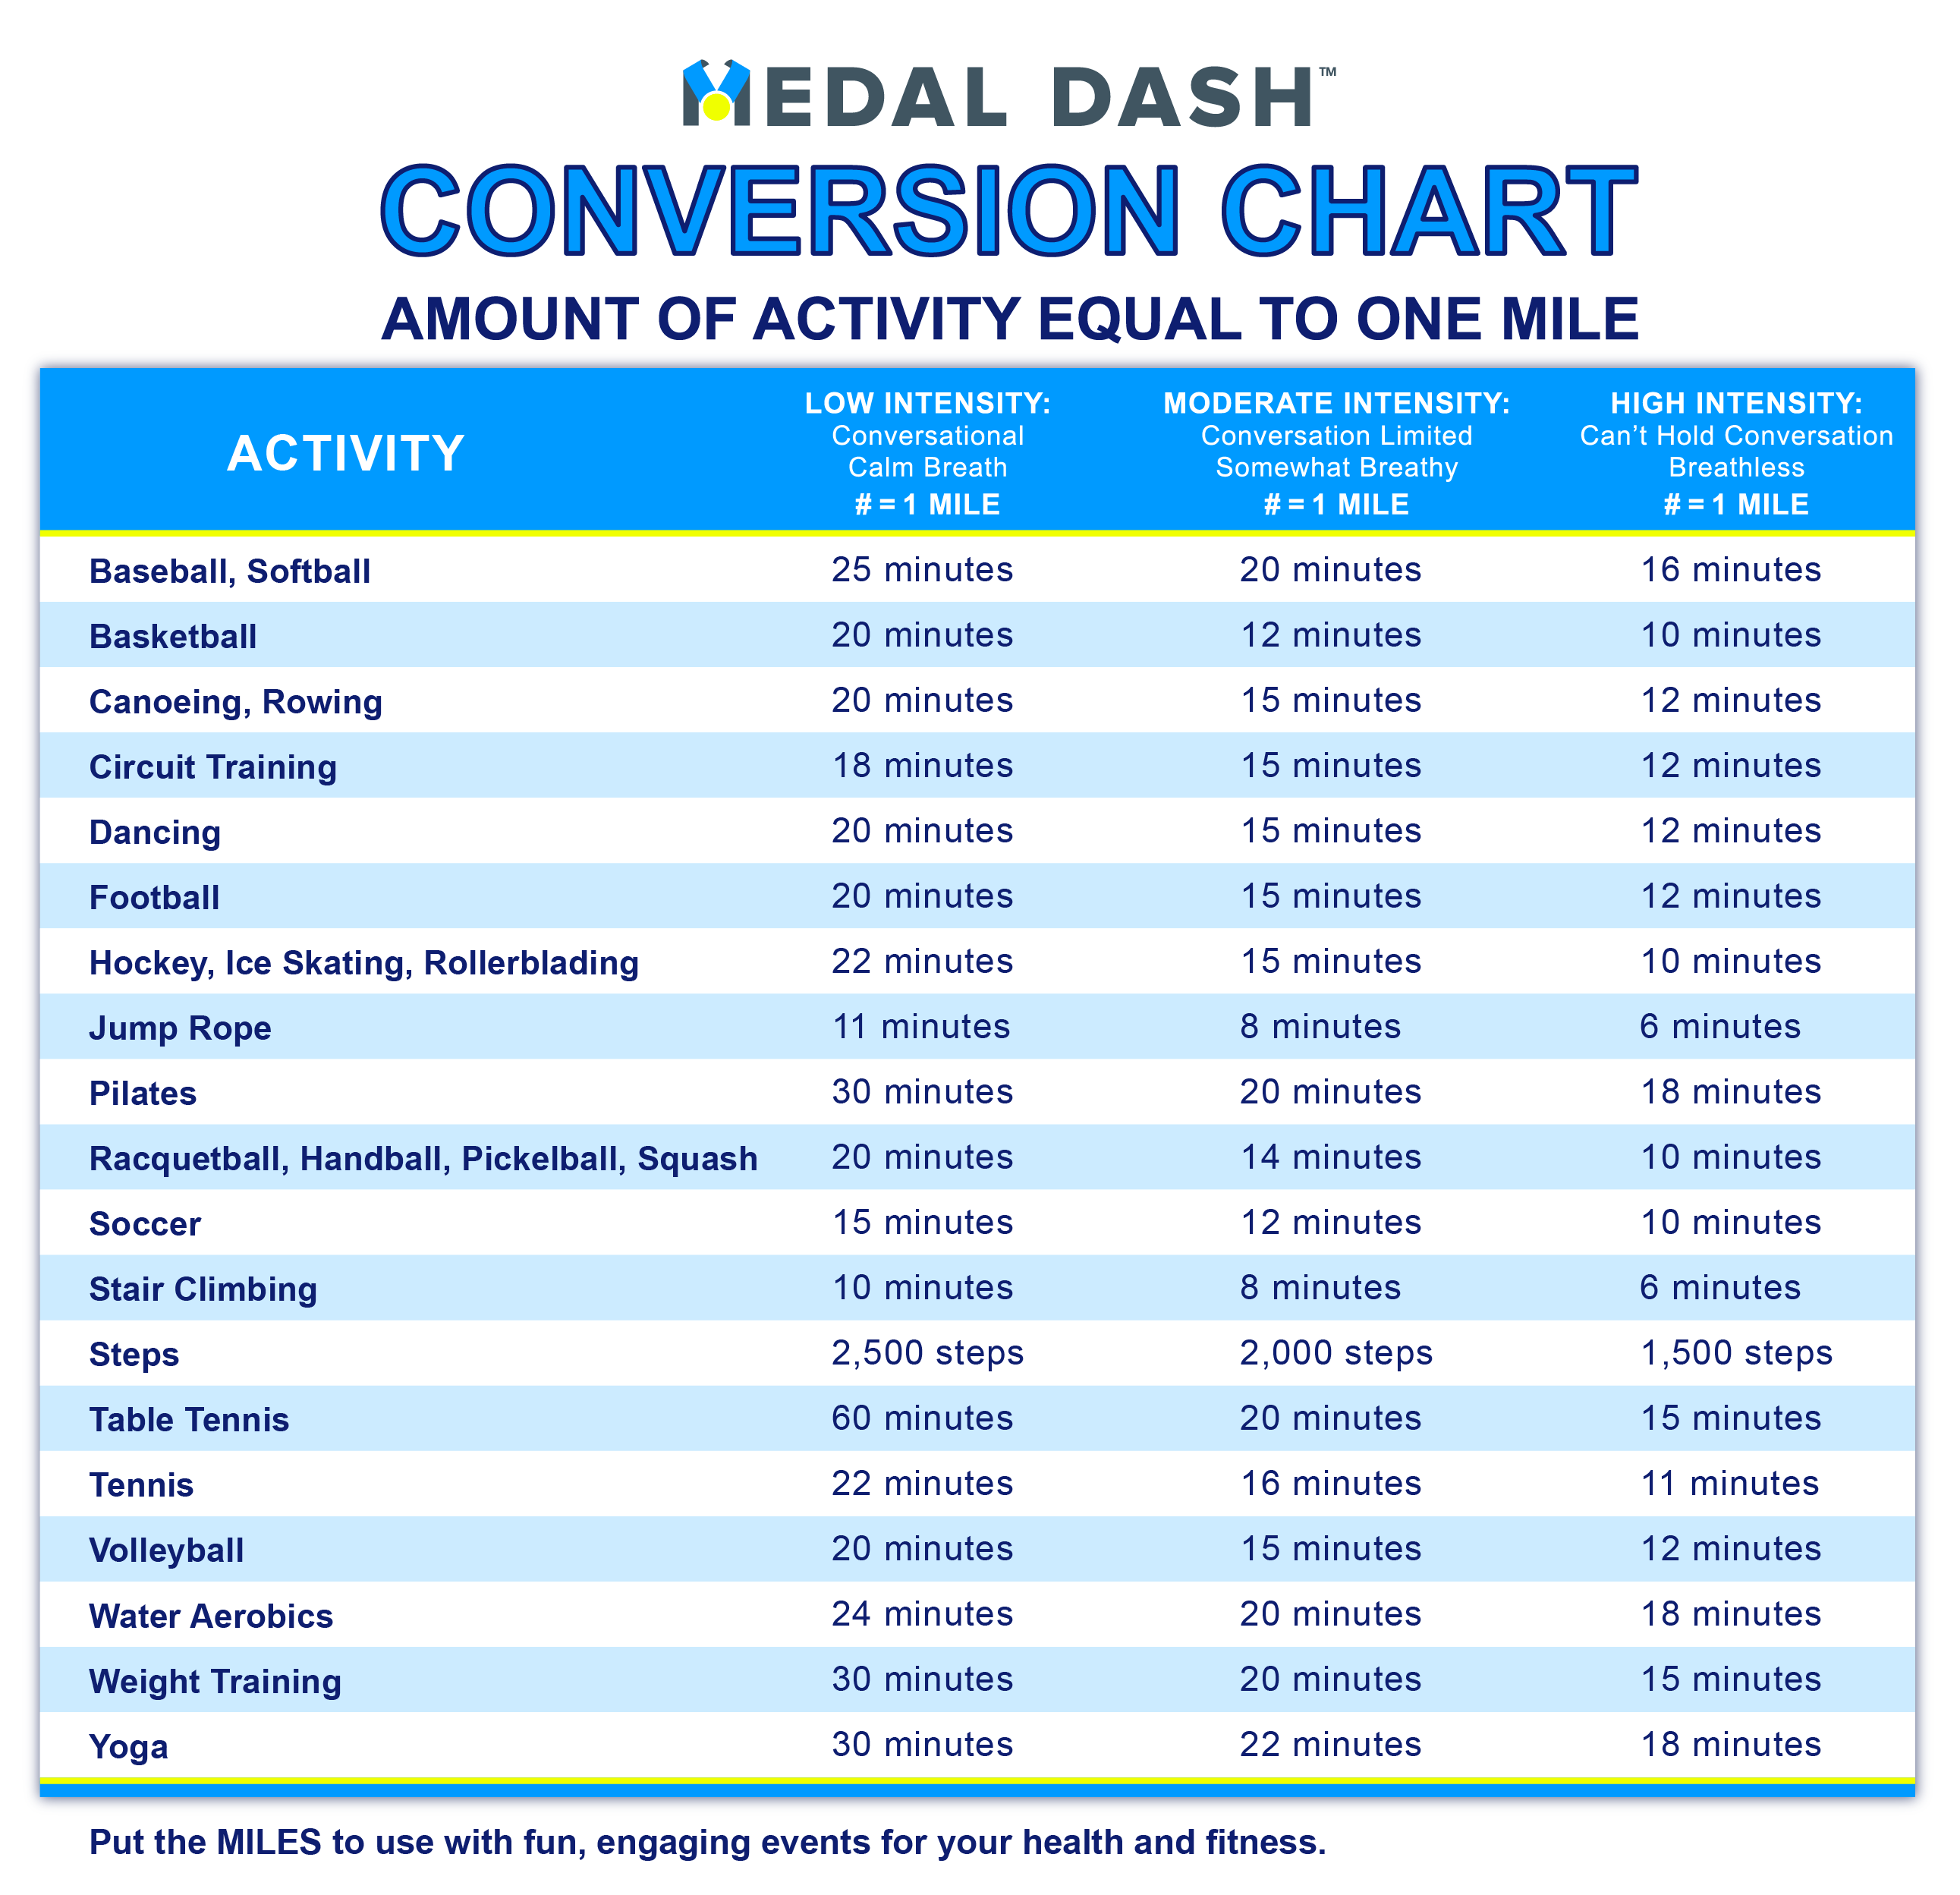 Medal Dash conversion chart